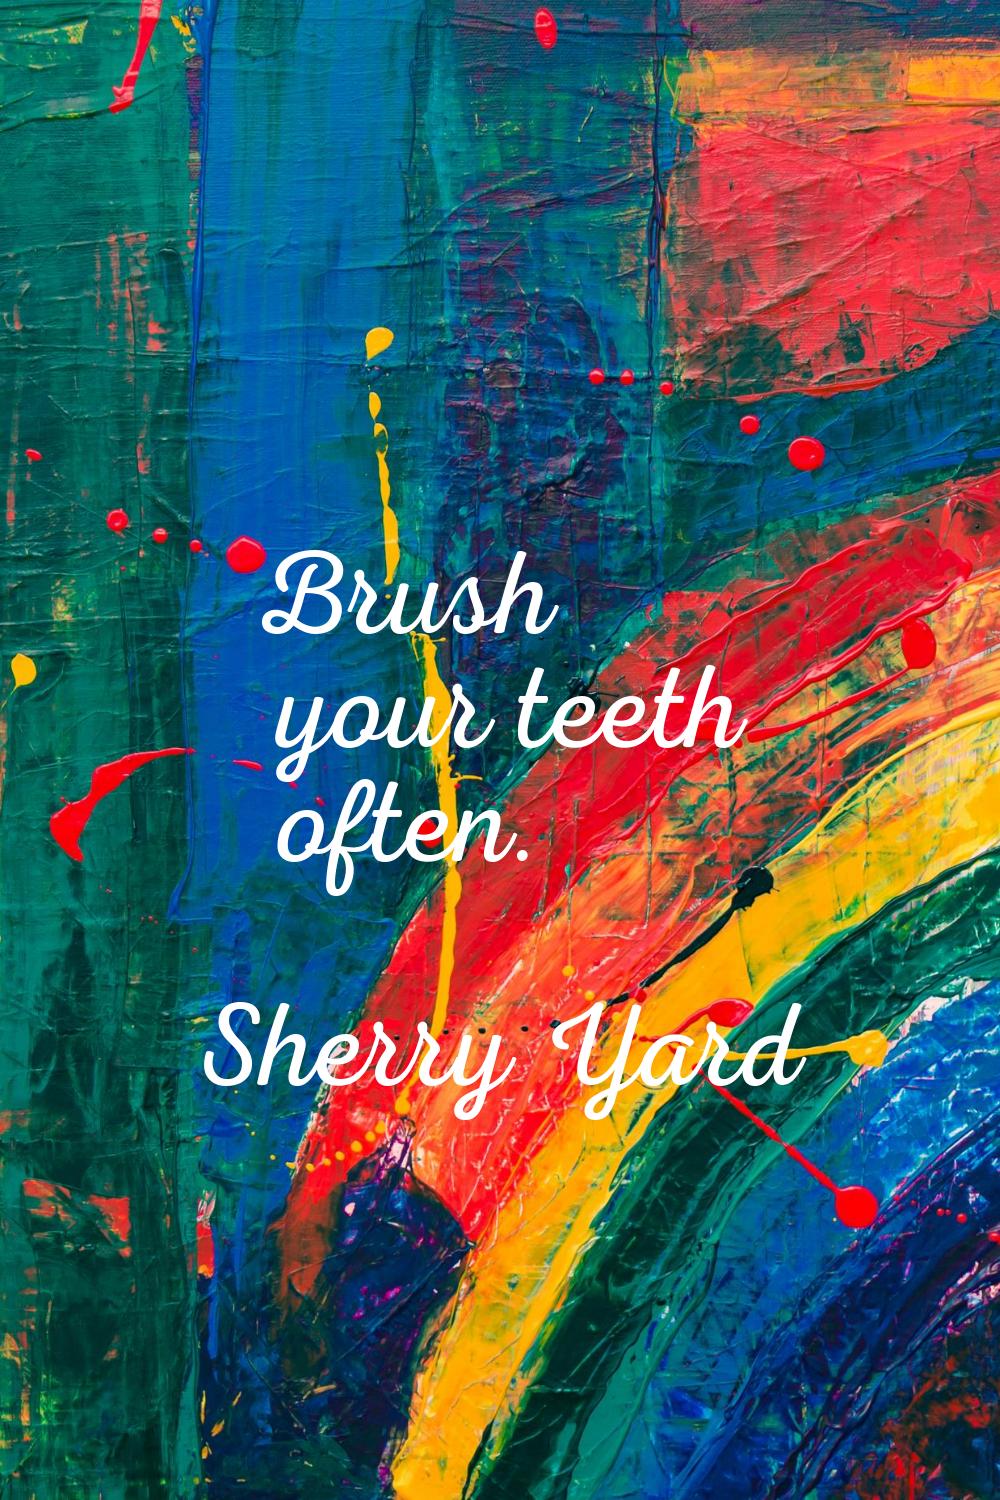 Brush your teeth often.